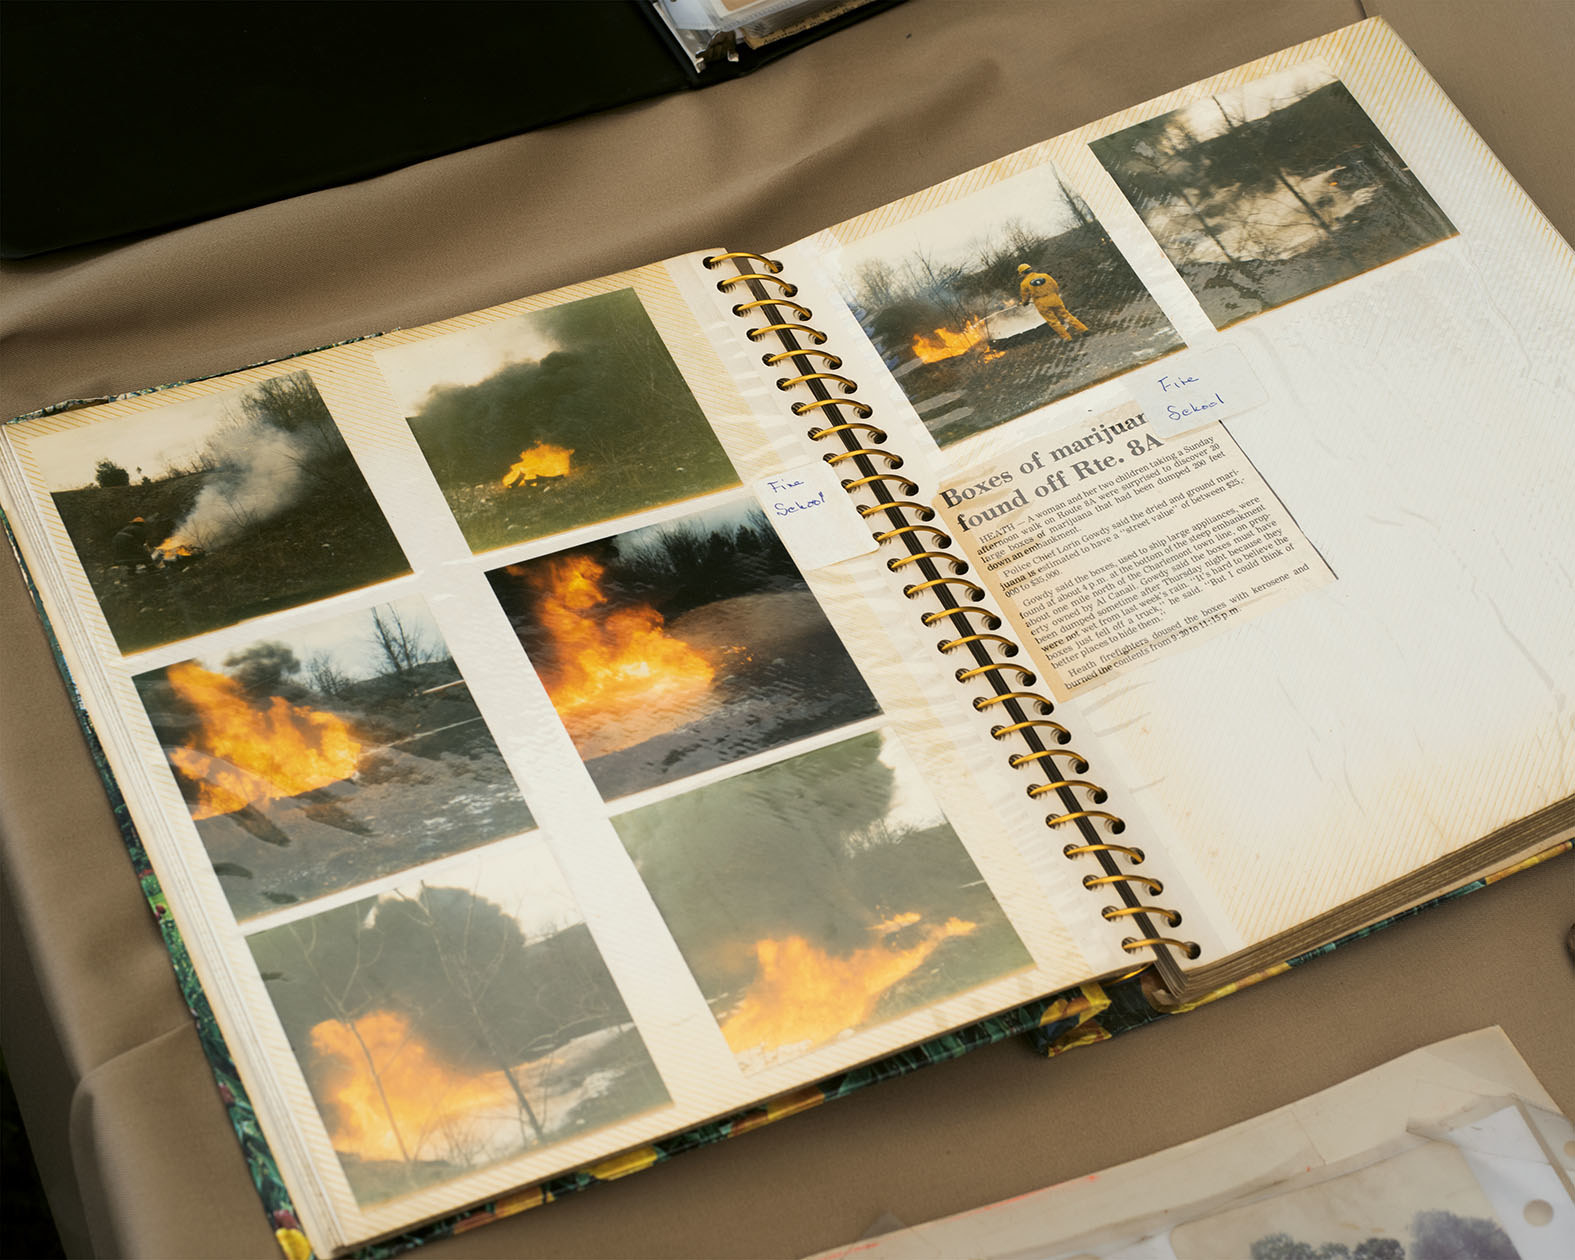 A photo album of brush fires